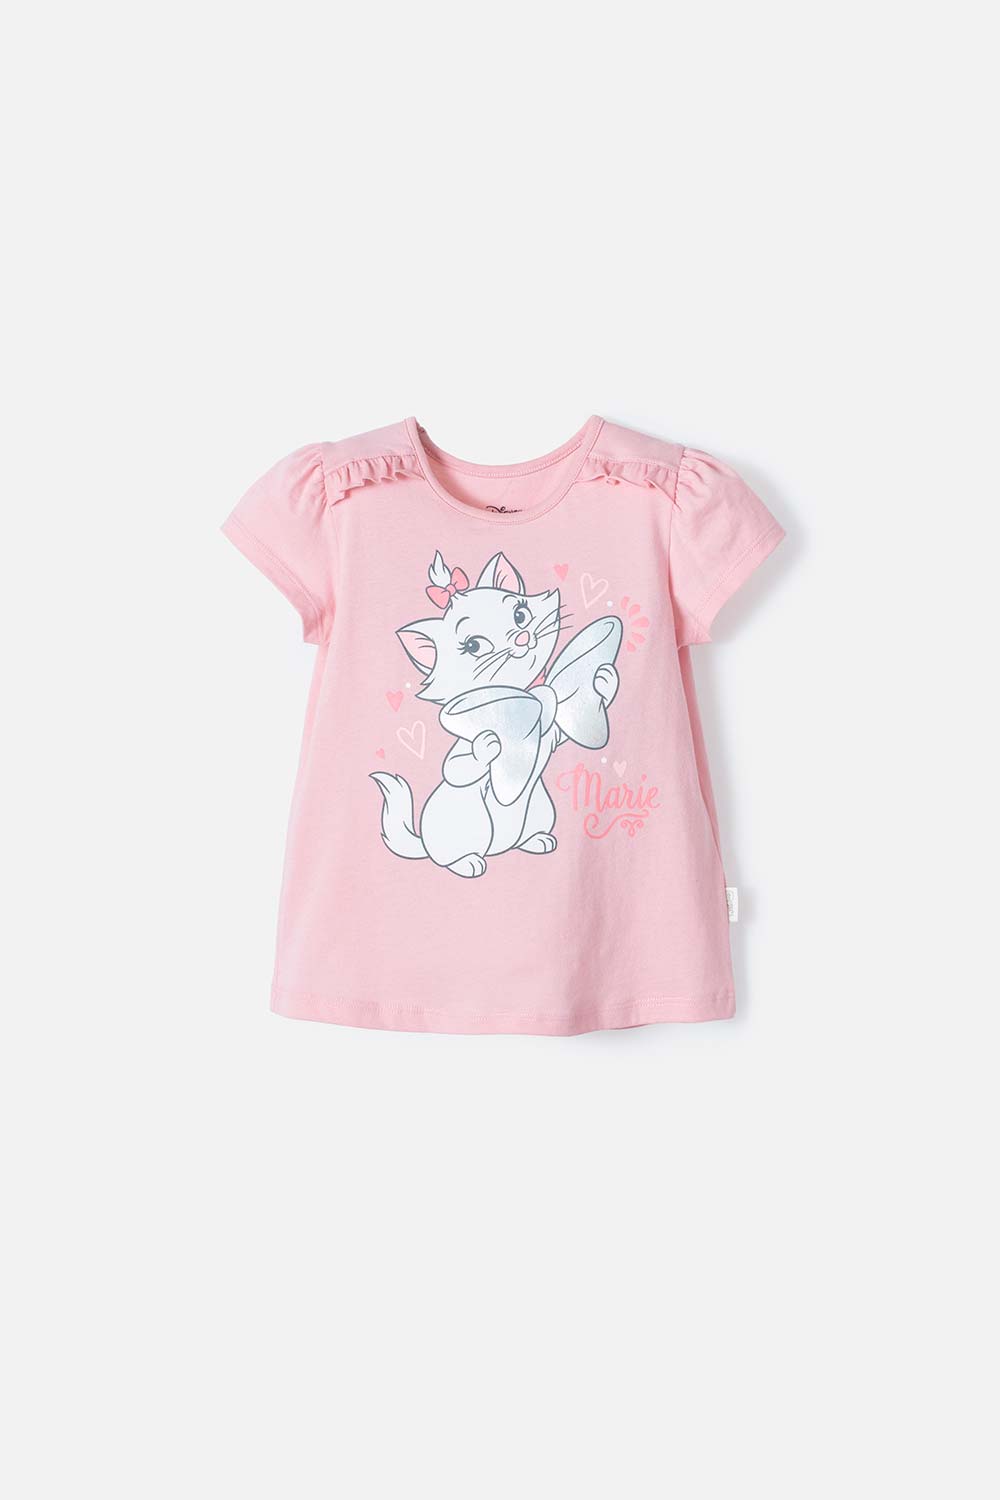 Camiseta de La Gata Marie manga corta palo de rosa para niña 2t a 5t 2T-0